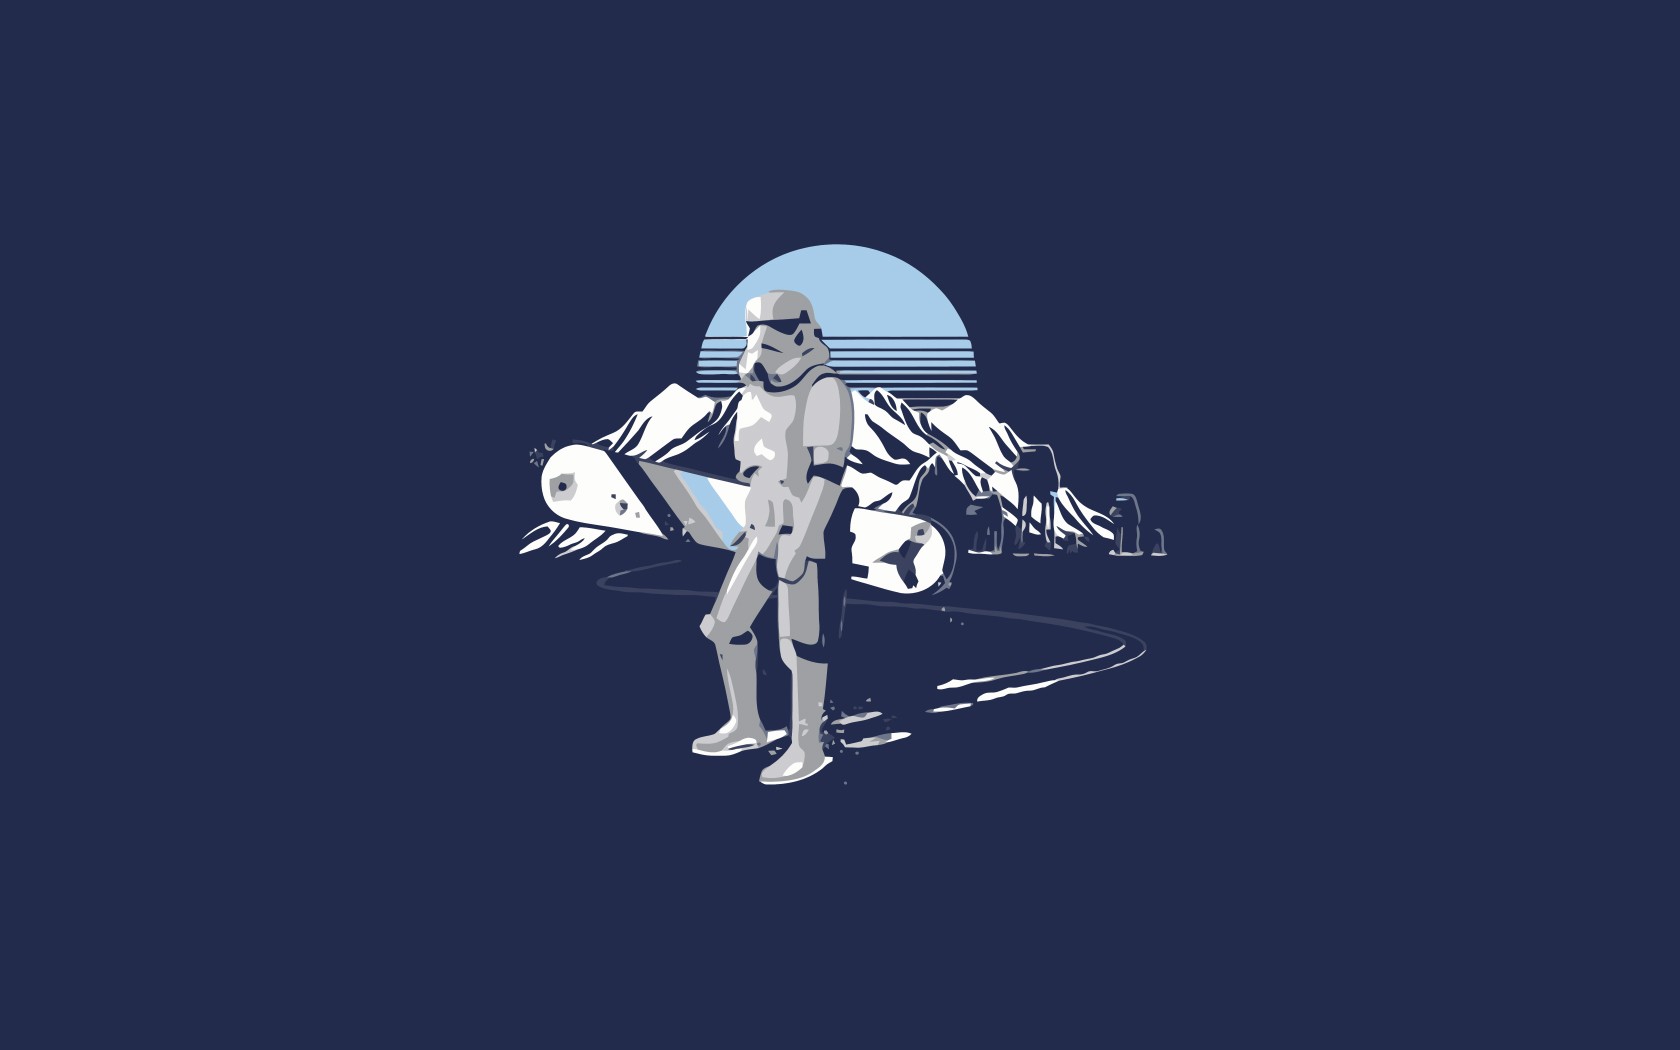 General 1680x1050 Star Wars stormtrooper snowboards humor minimalism Star Wars Humor blue background Imperial Stormtrooper artwork